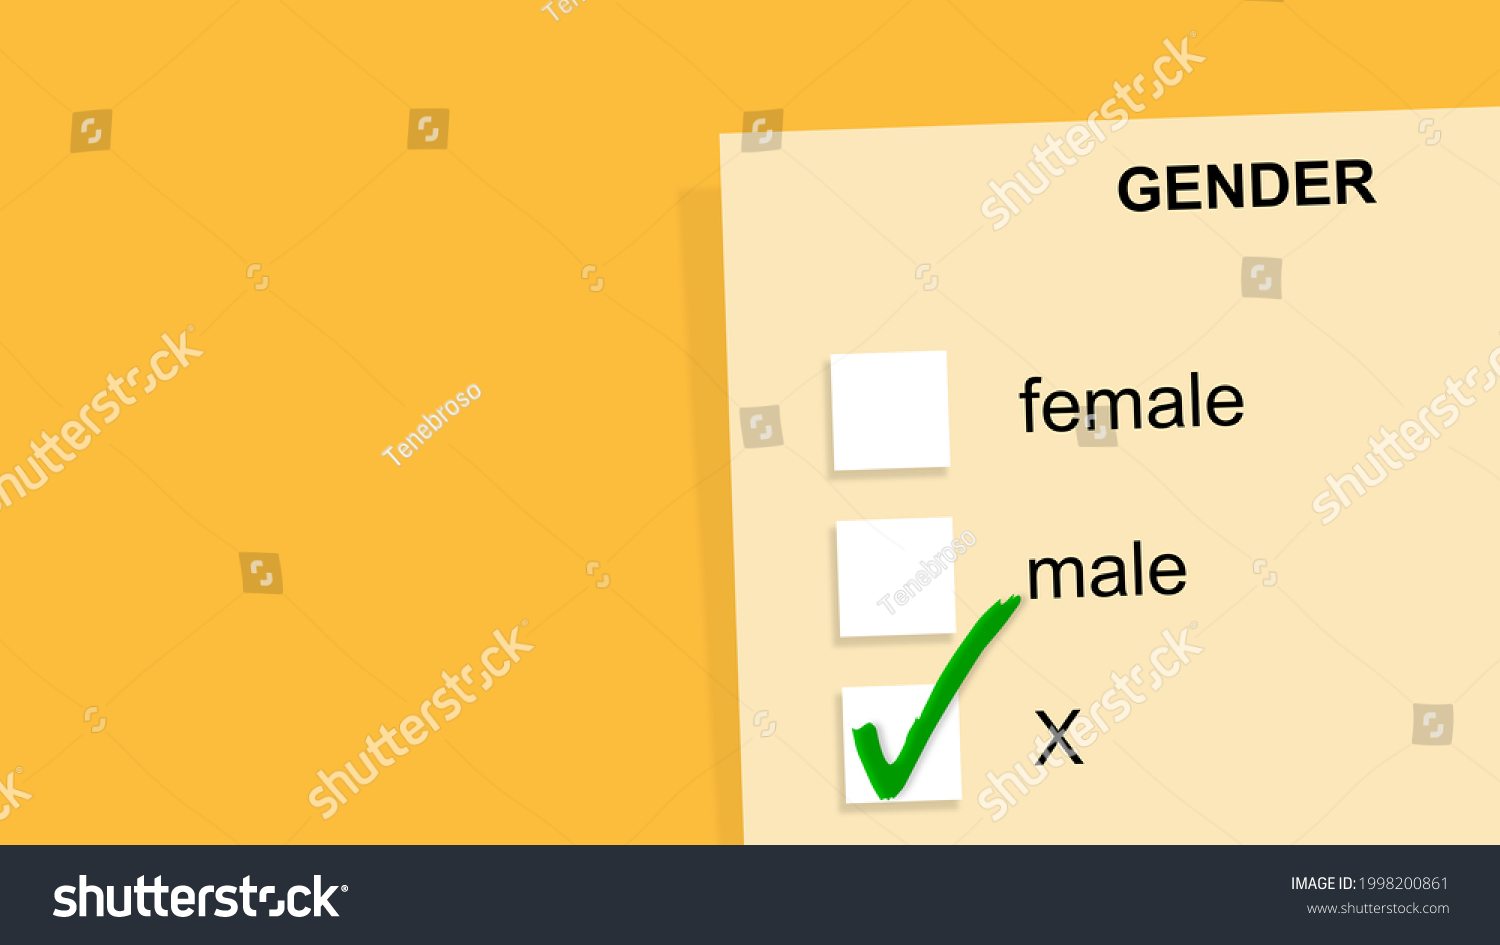 Third Gender Classifications Nonbinary Intersex People Stock Illustration 1998200861 Shutterstock 9345